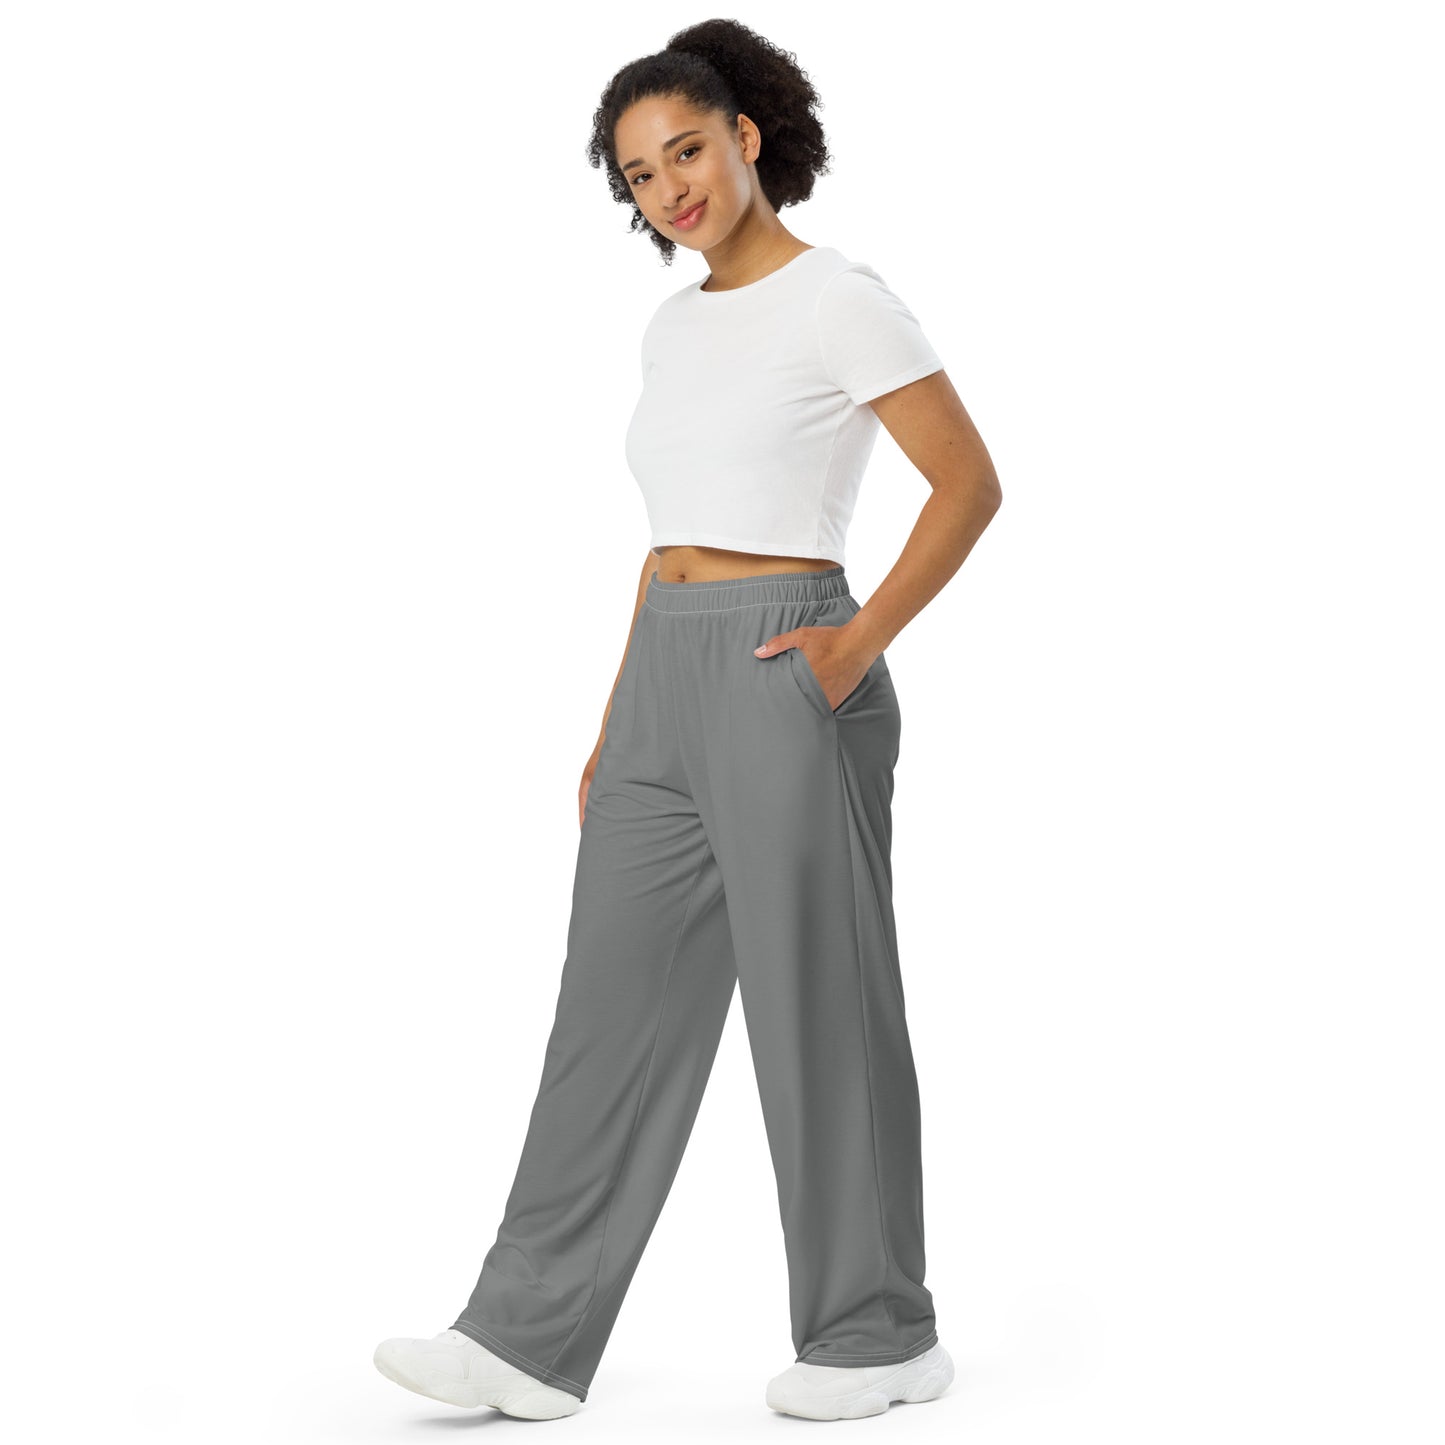 CS0054 - 01010 - SKI ON Unisex wide-leg pants (Matching Gray)